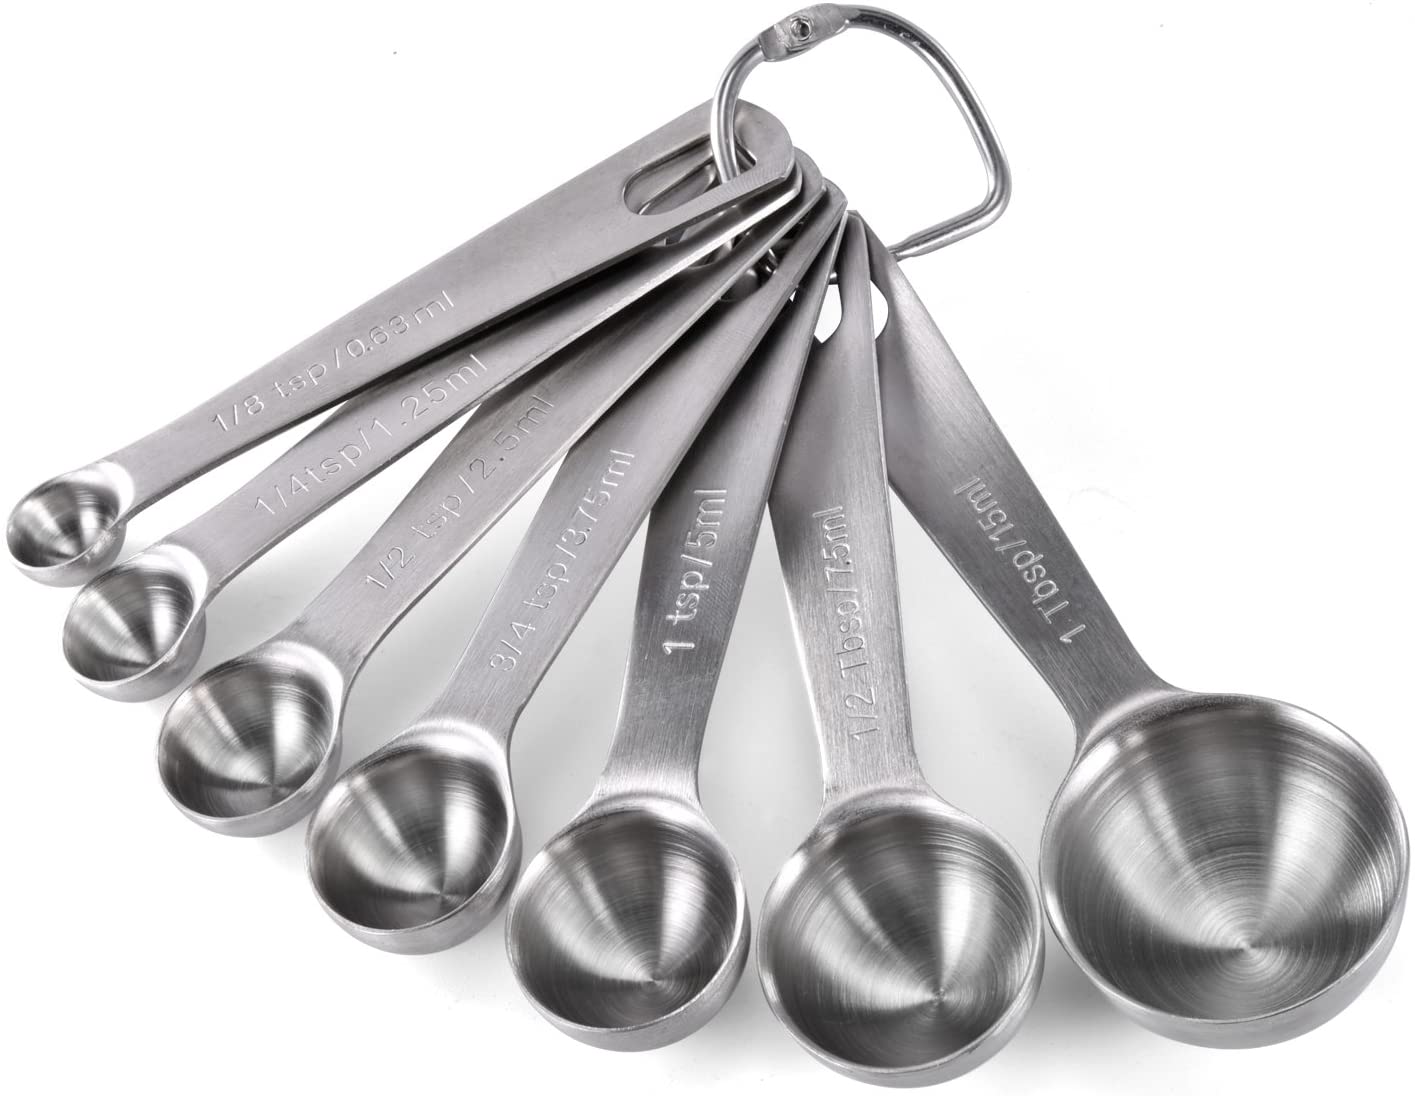 https://www.dontwasteyourmoney.com/wp-content/uploads/2019/12/u-taste-stainless-steel-measuring-spoons-7-piece.jpg